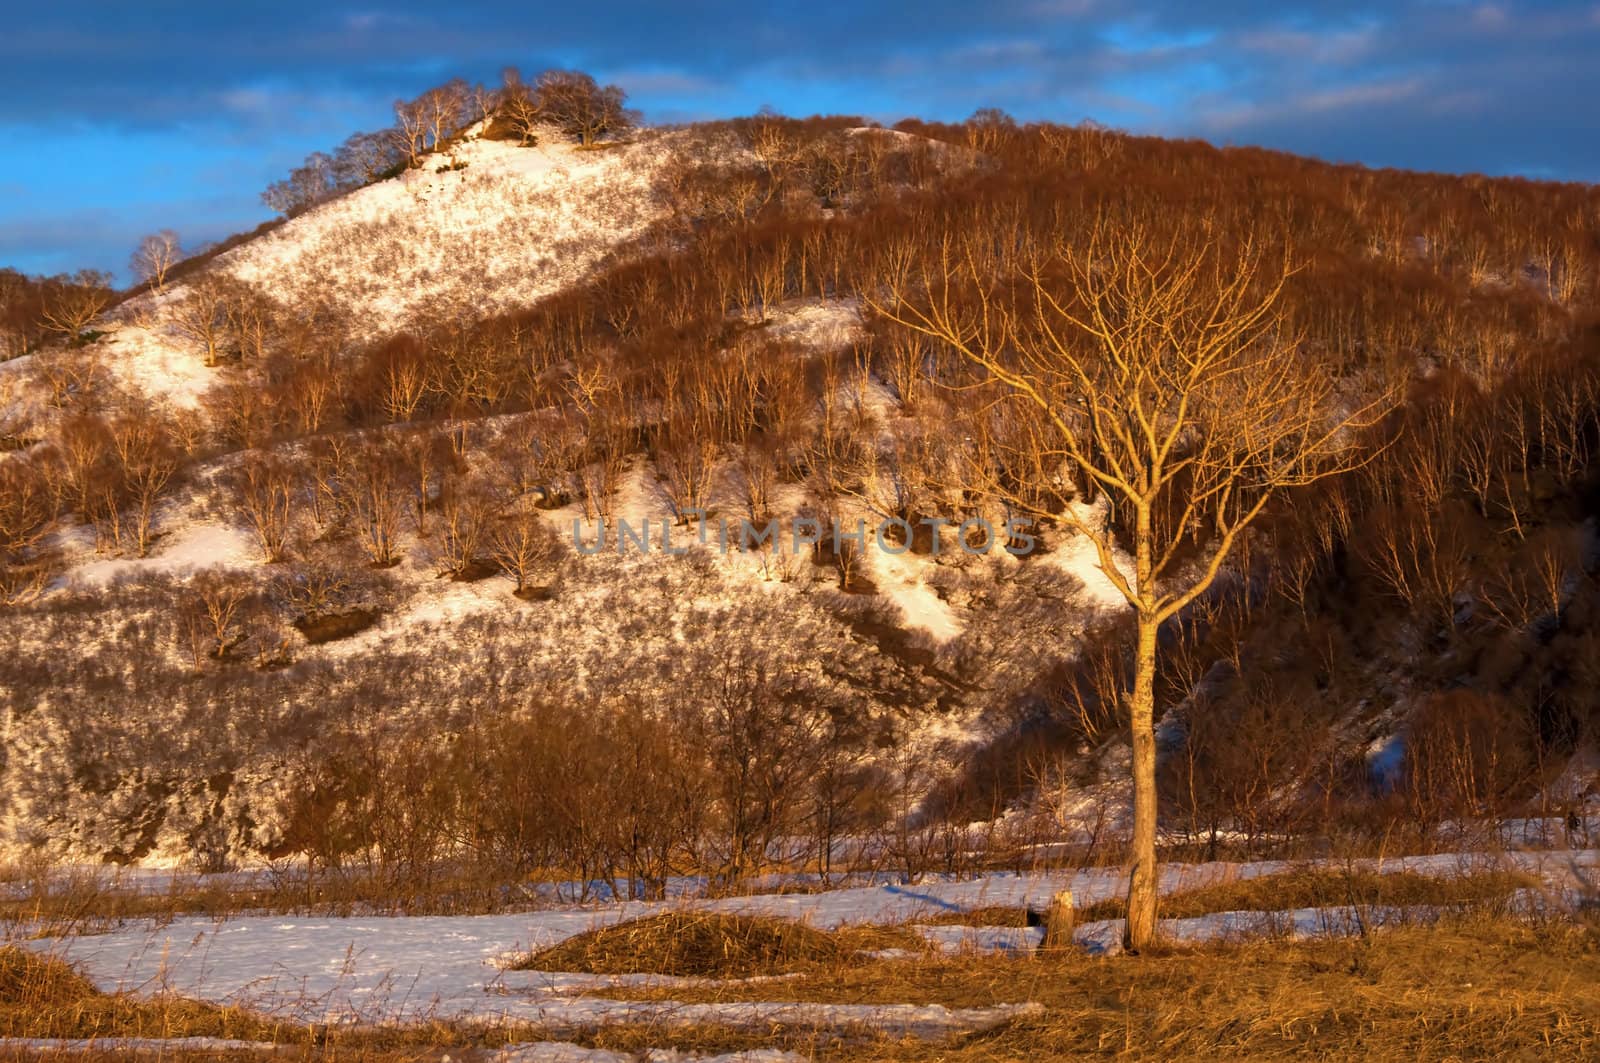 Winter landscape by alena0509